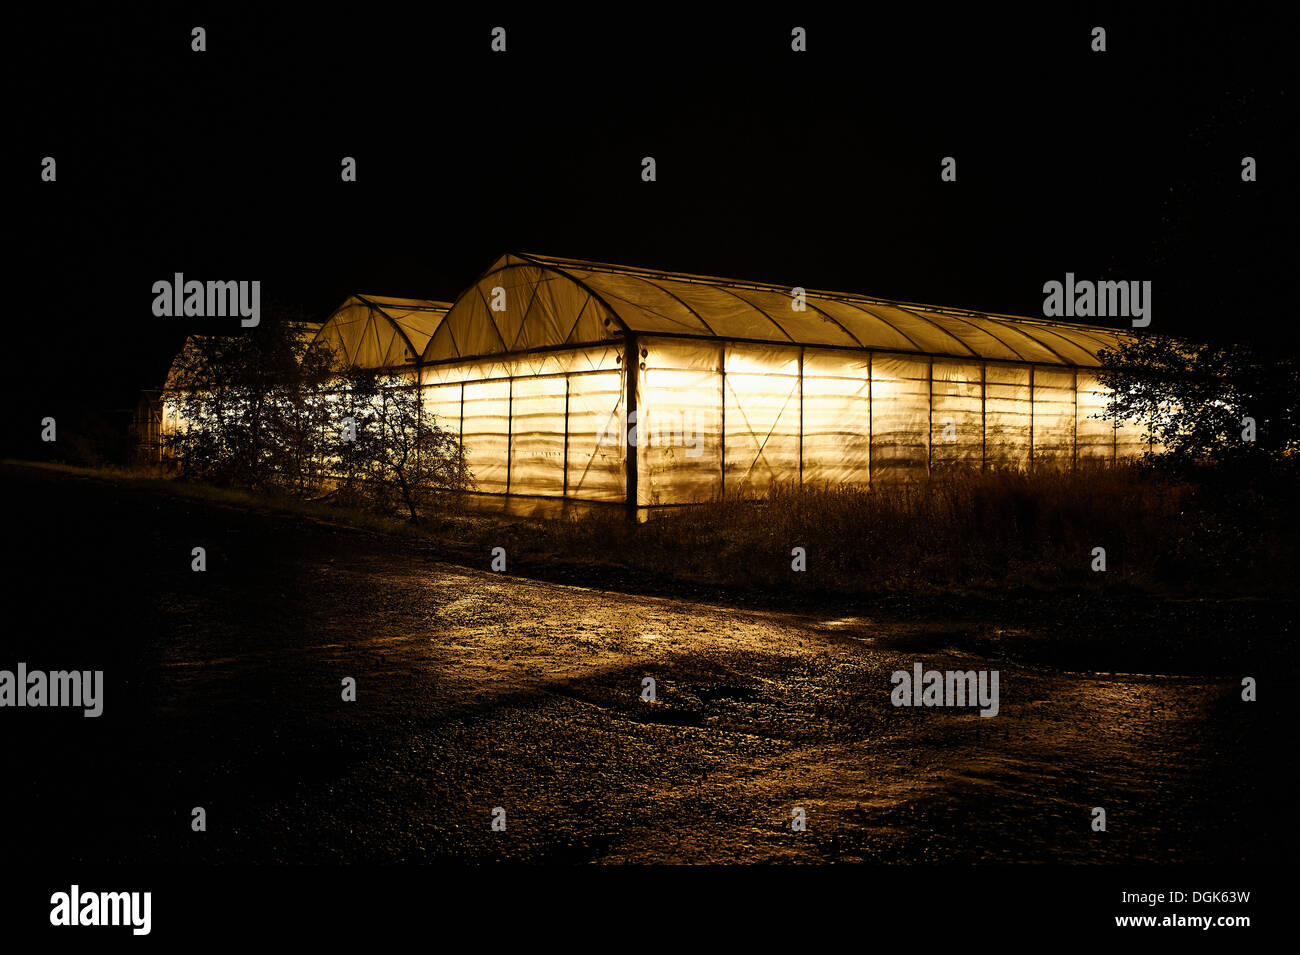 Illuminated greenhouses at night, Iceland Stock Photo